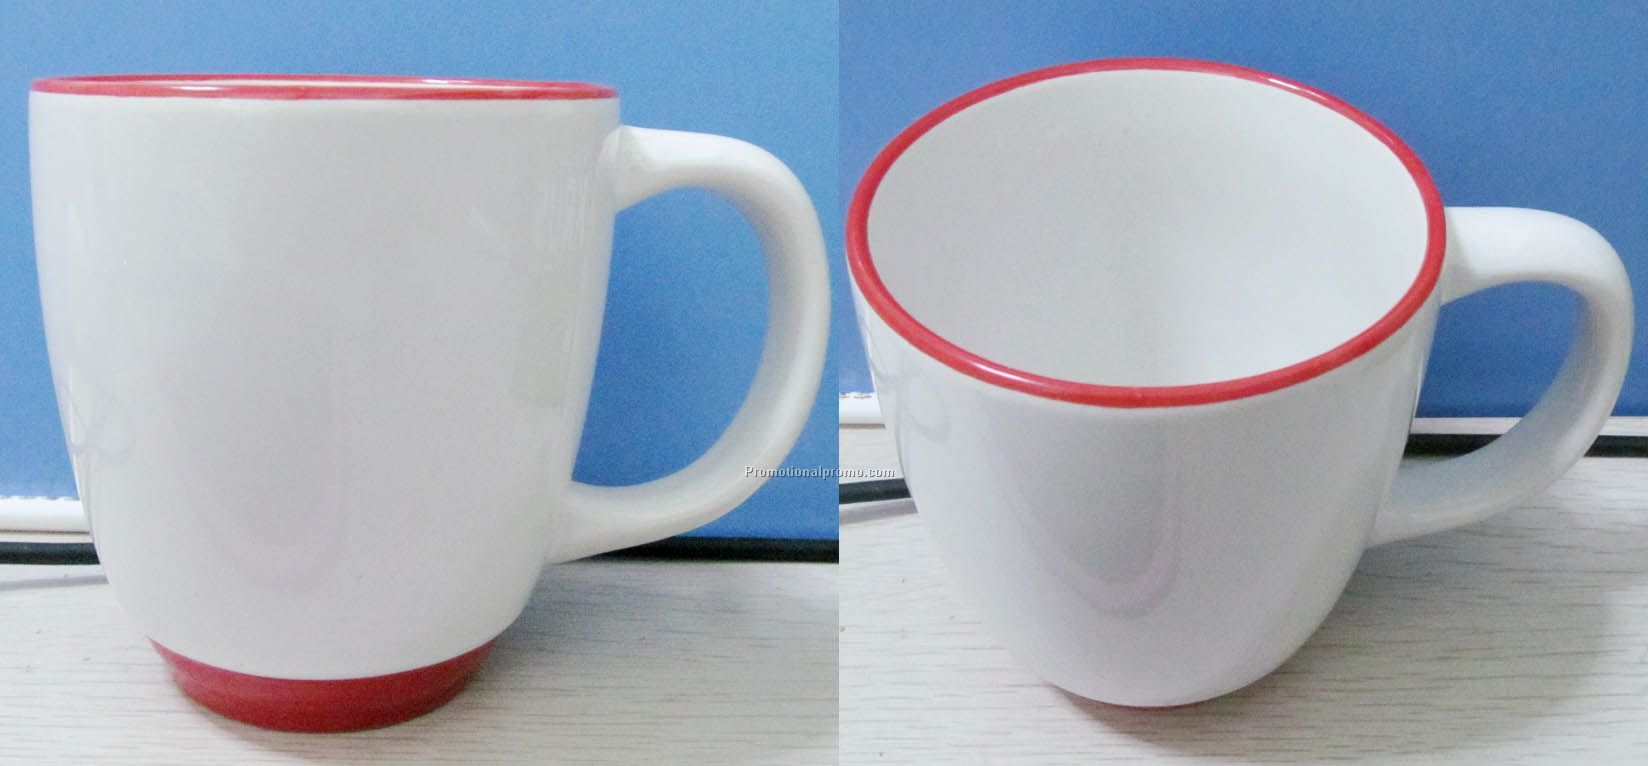 Promotional Ceramic mugs, Promotional Bistro mugs